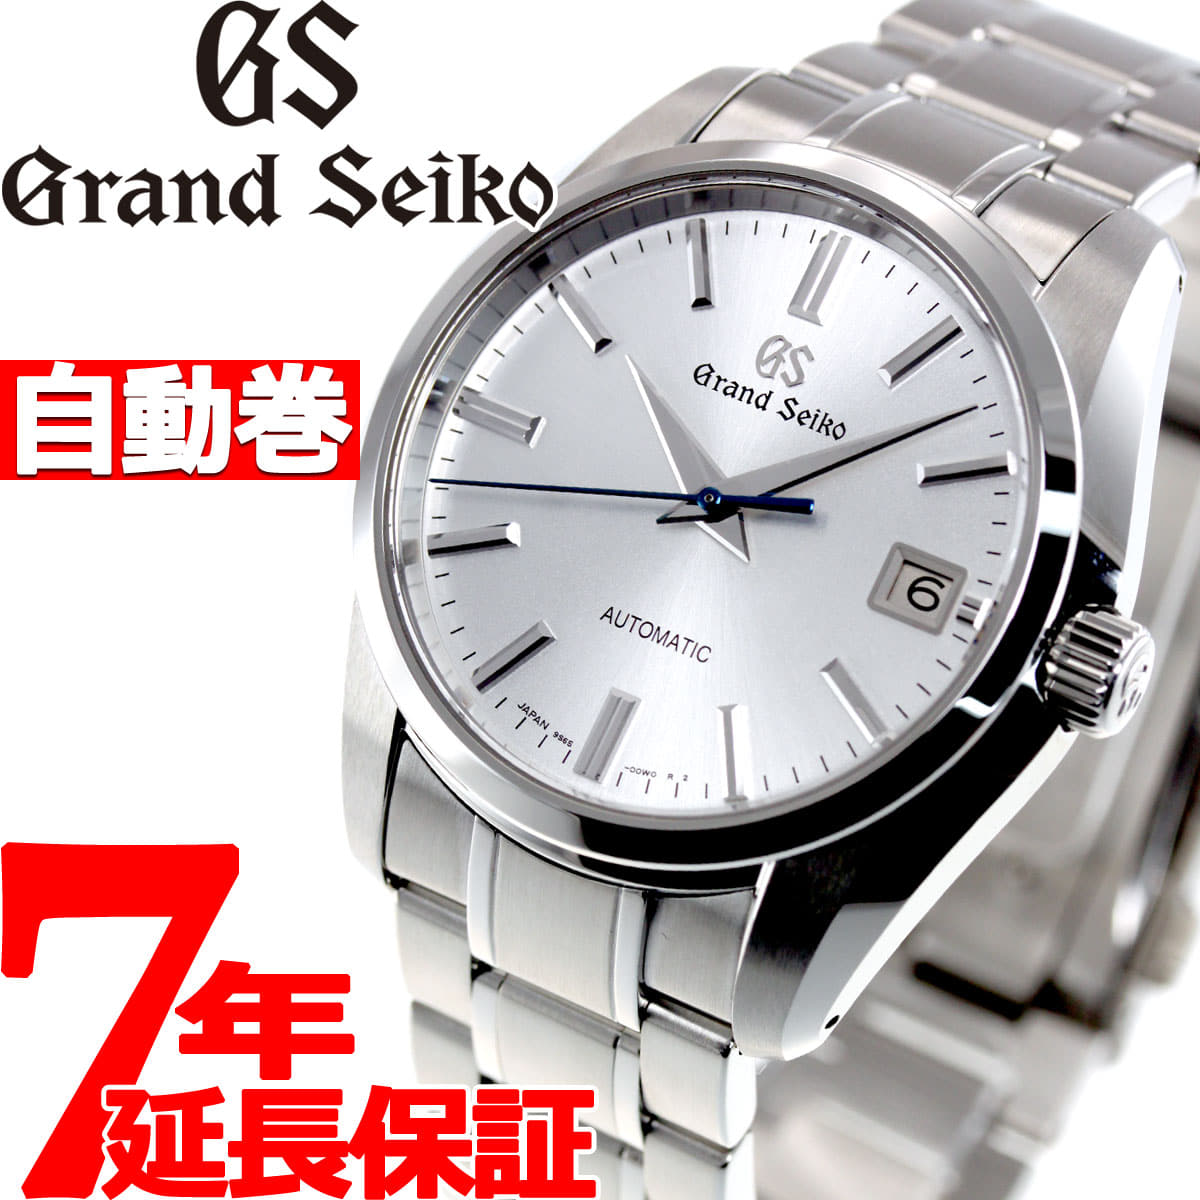 New]Grand SEIKO GRAND SEIKO mechanical self-winding watch watch men SBGR315  [2019 new works] - BE FORWARD Store